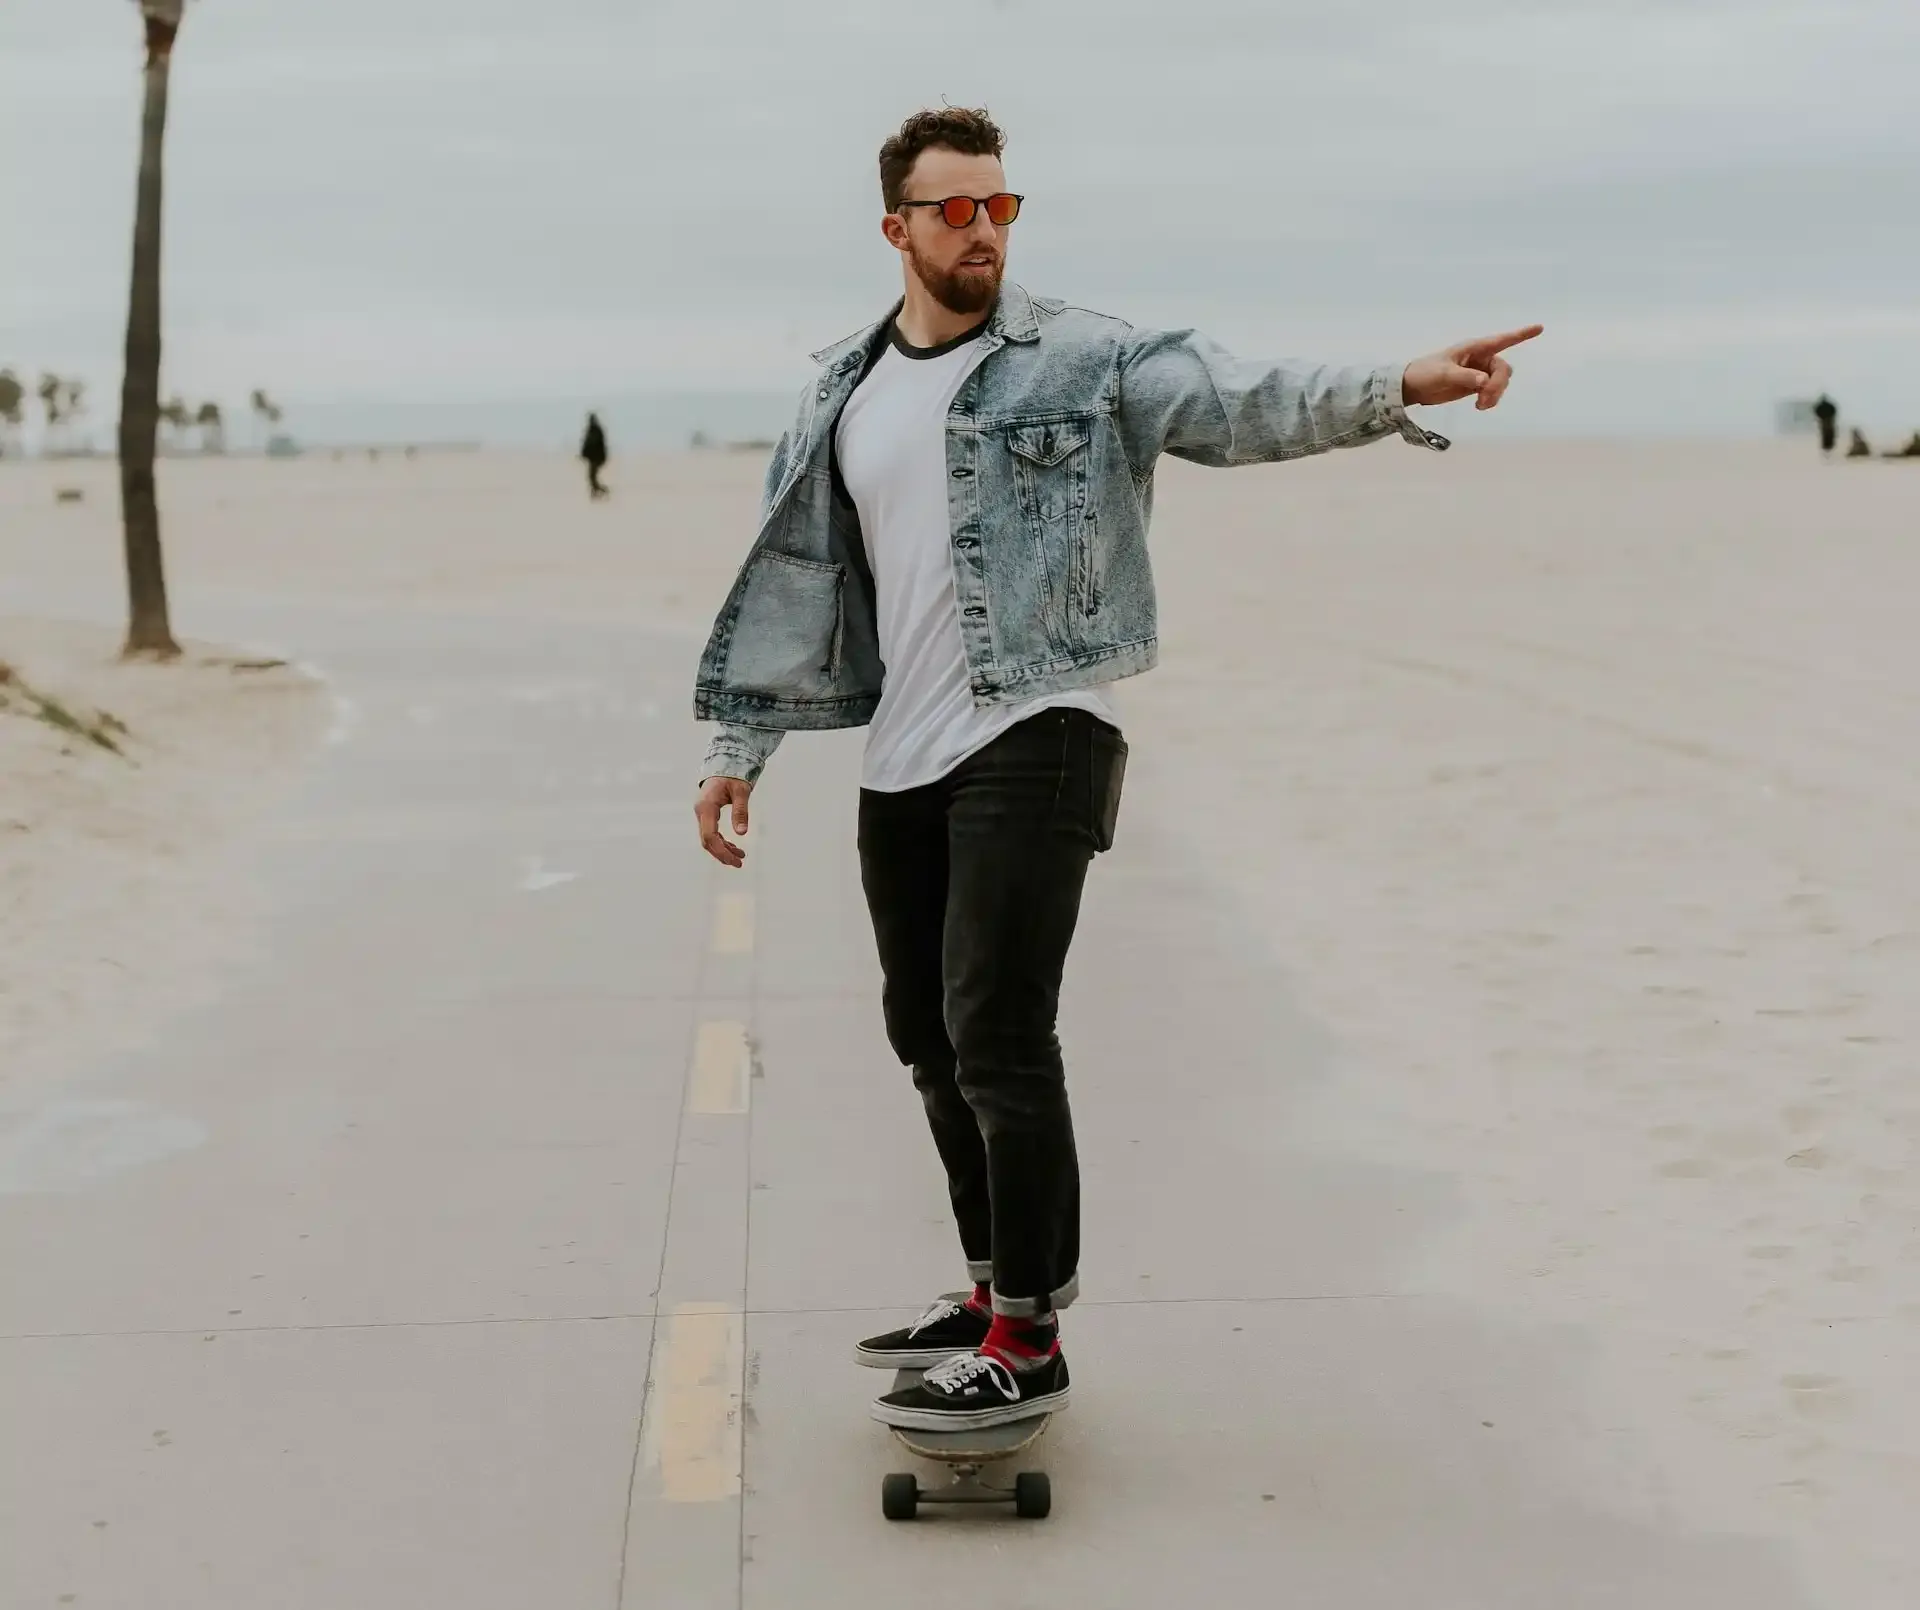 A man skateboarding